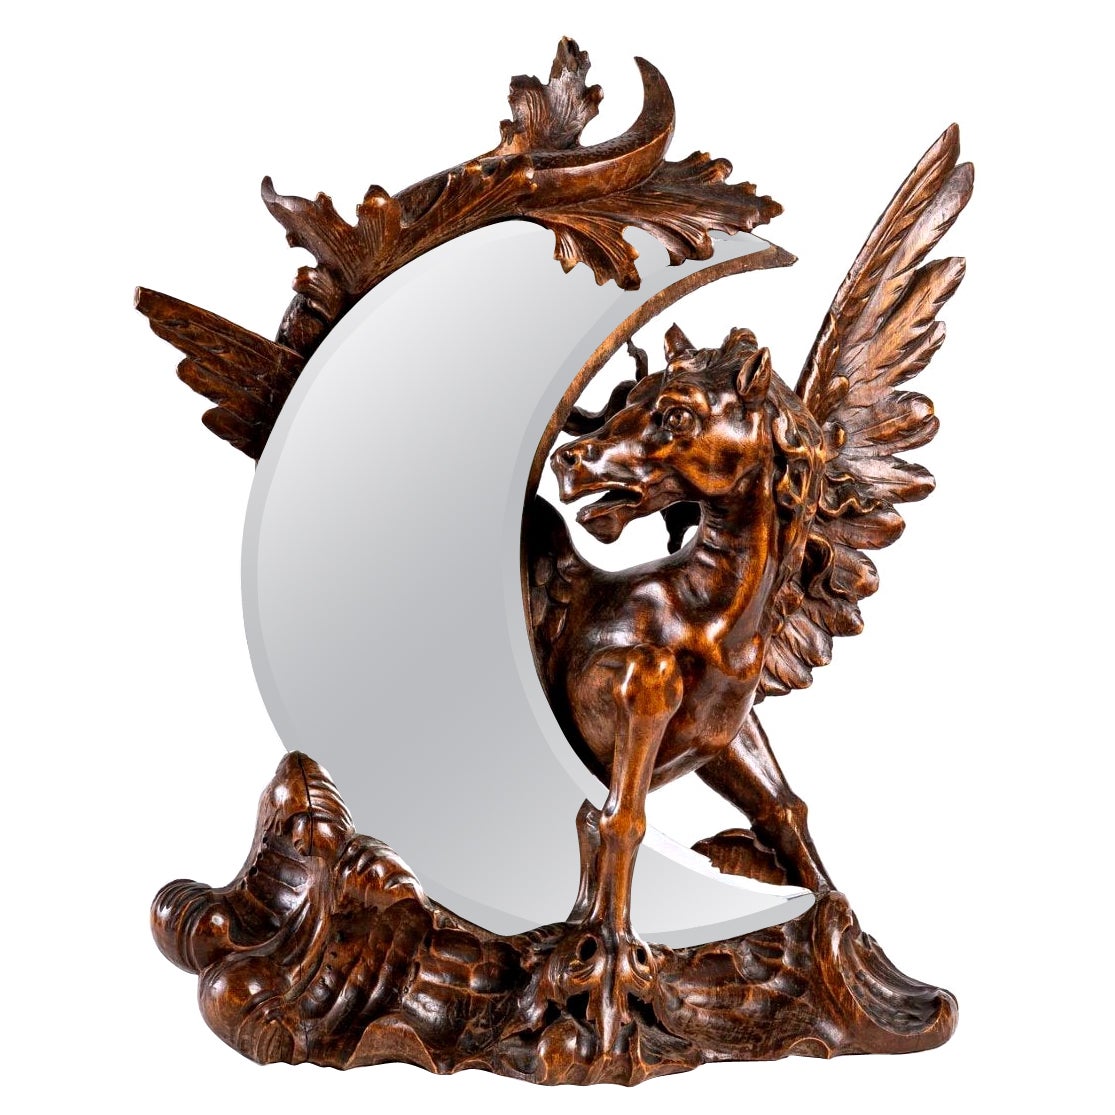 Moon Shaped Table Mirror- Wooden Pegasus Sculpture Attributed To Gabriel Viardot